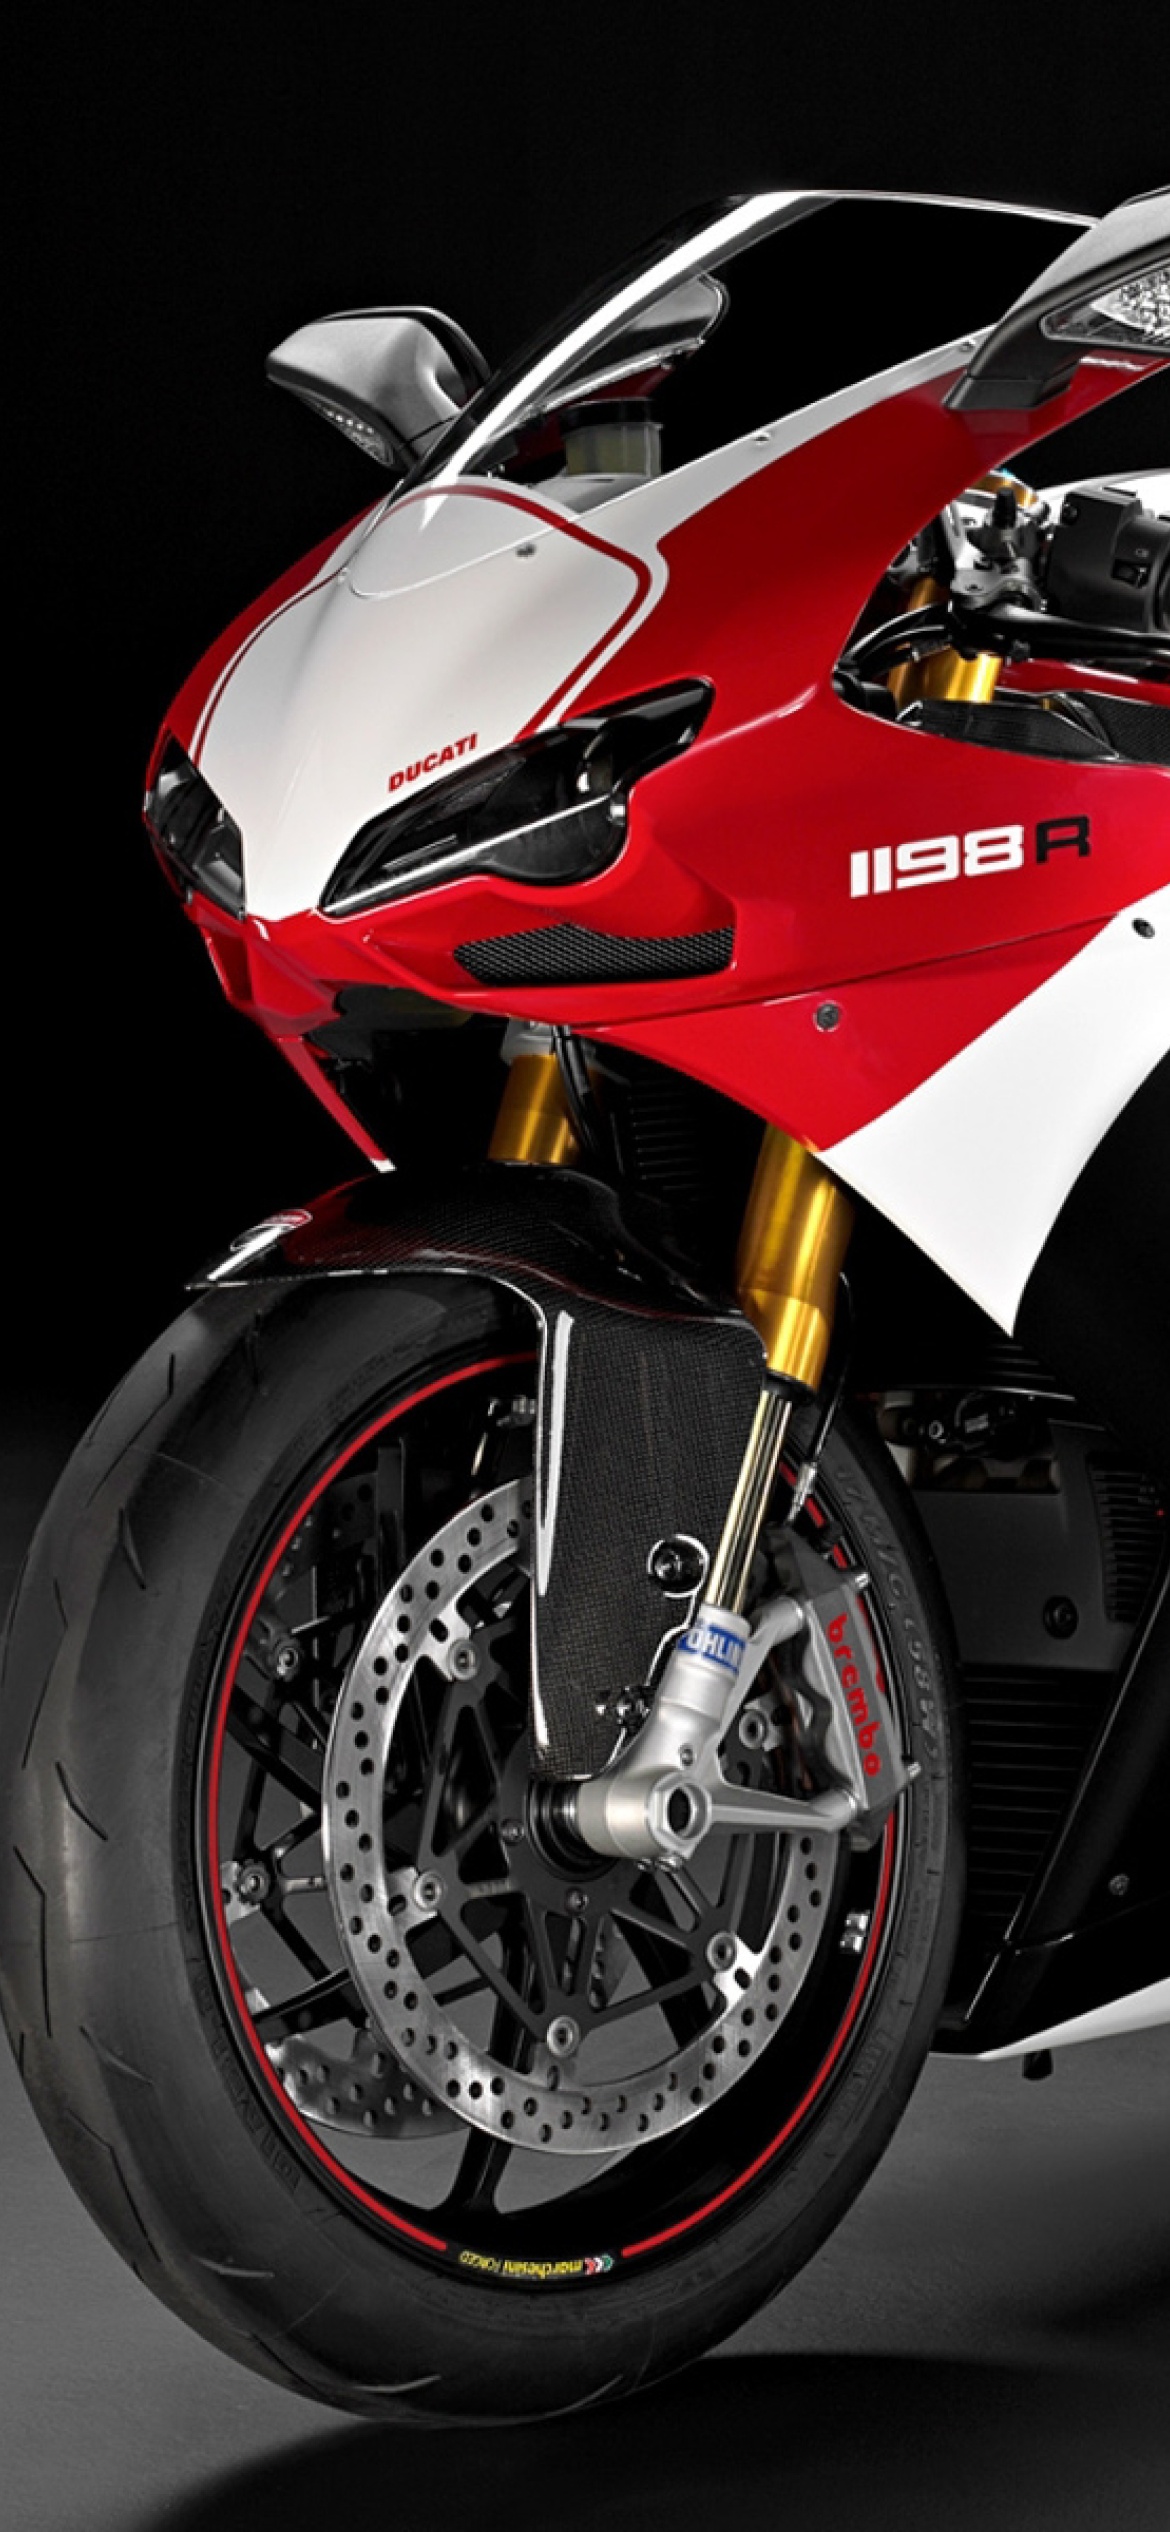 Das Superbike Ducati 1198 R Wallpaper 1170x2532